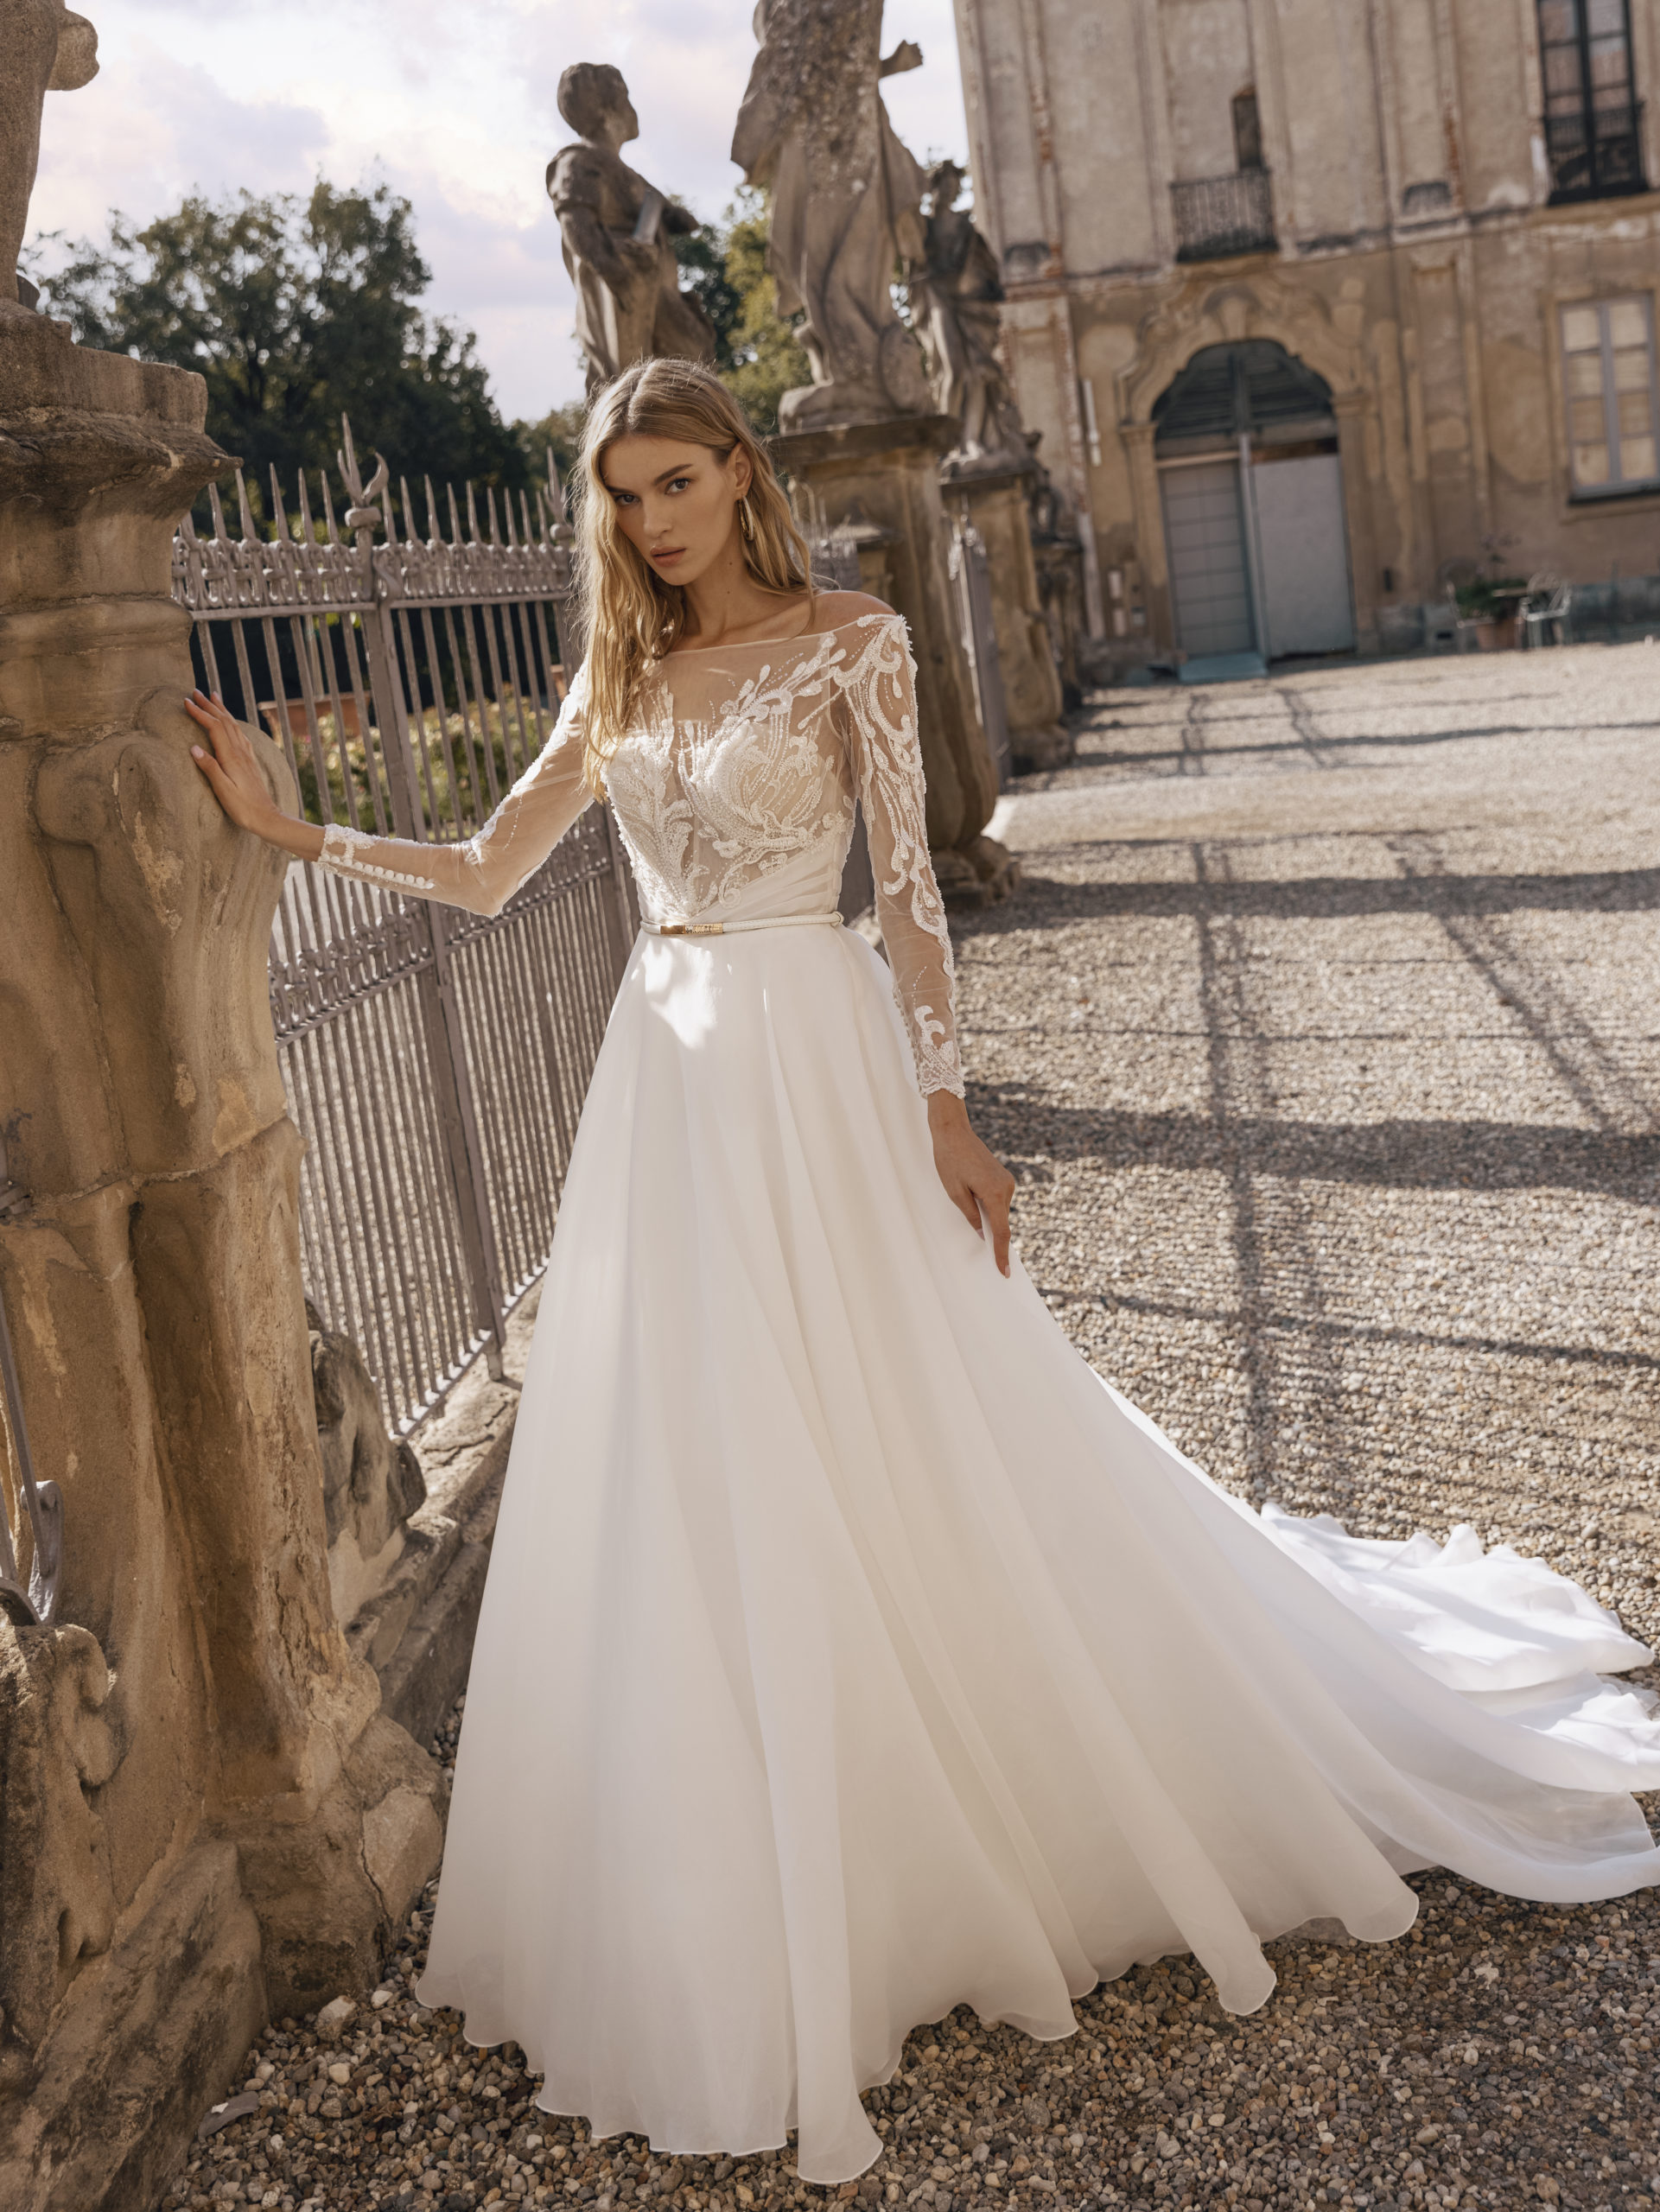 geneve ukraine créateur exclusif geneve robe de mariée geneve princesse haute couture blanc perle dentelle broderie